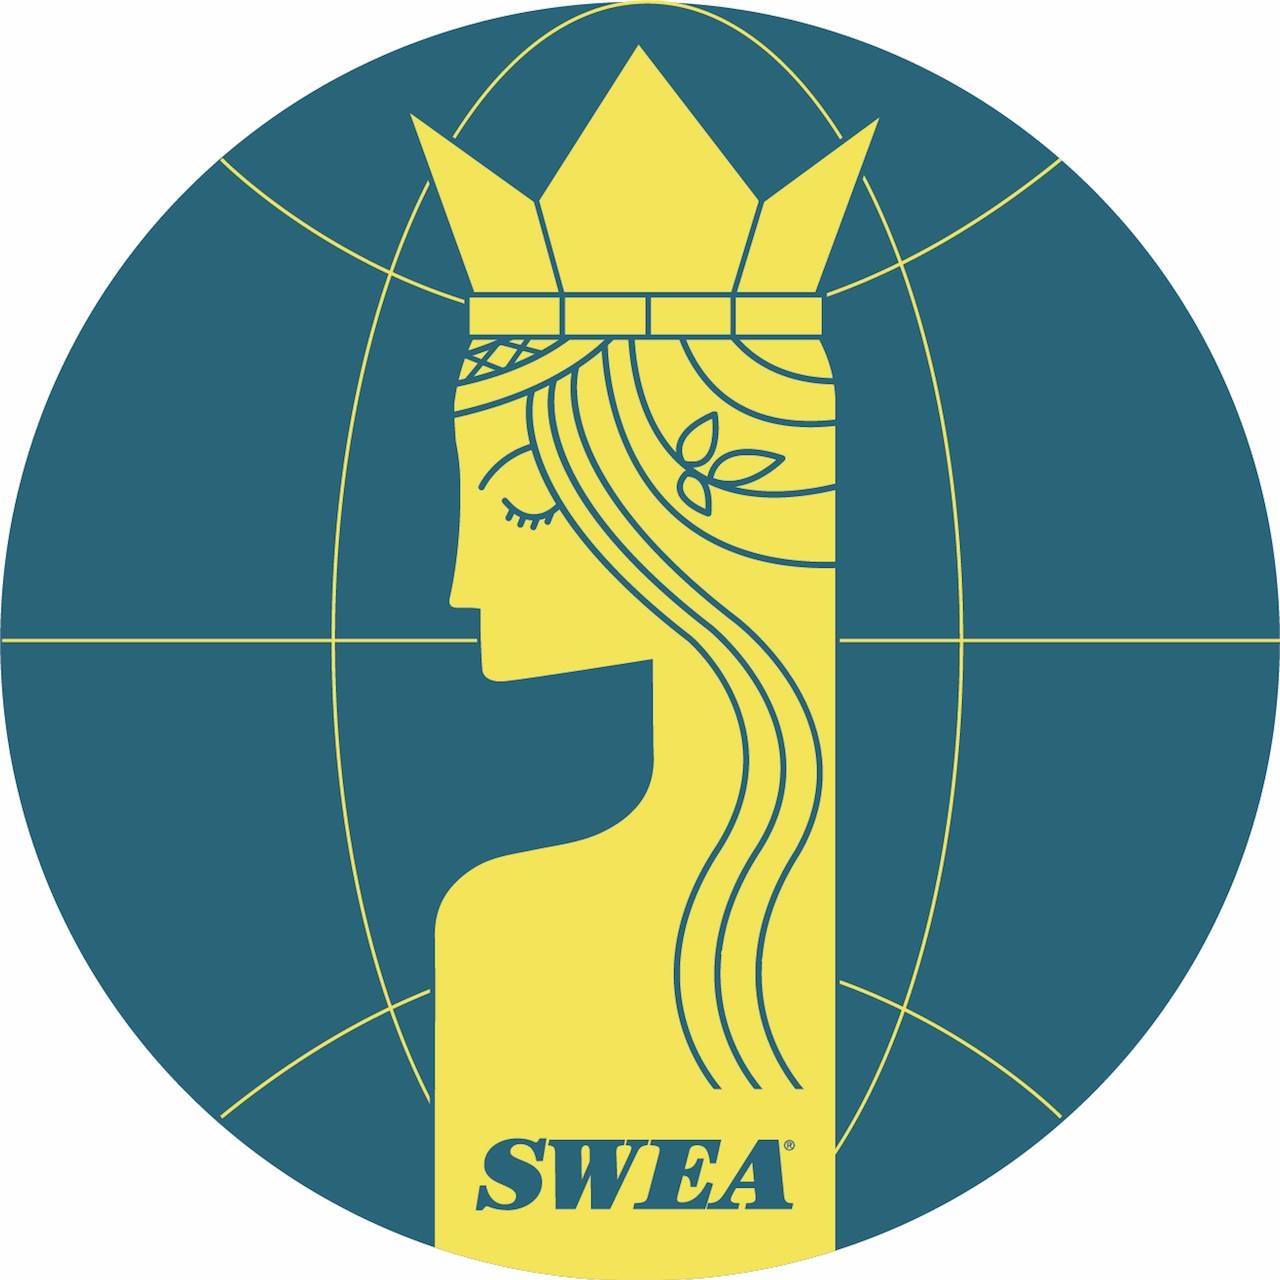 Swedish Speaking Organization in San Diego California - Swedish Women’s Educational Association Orange County